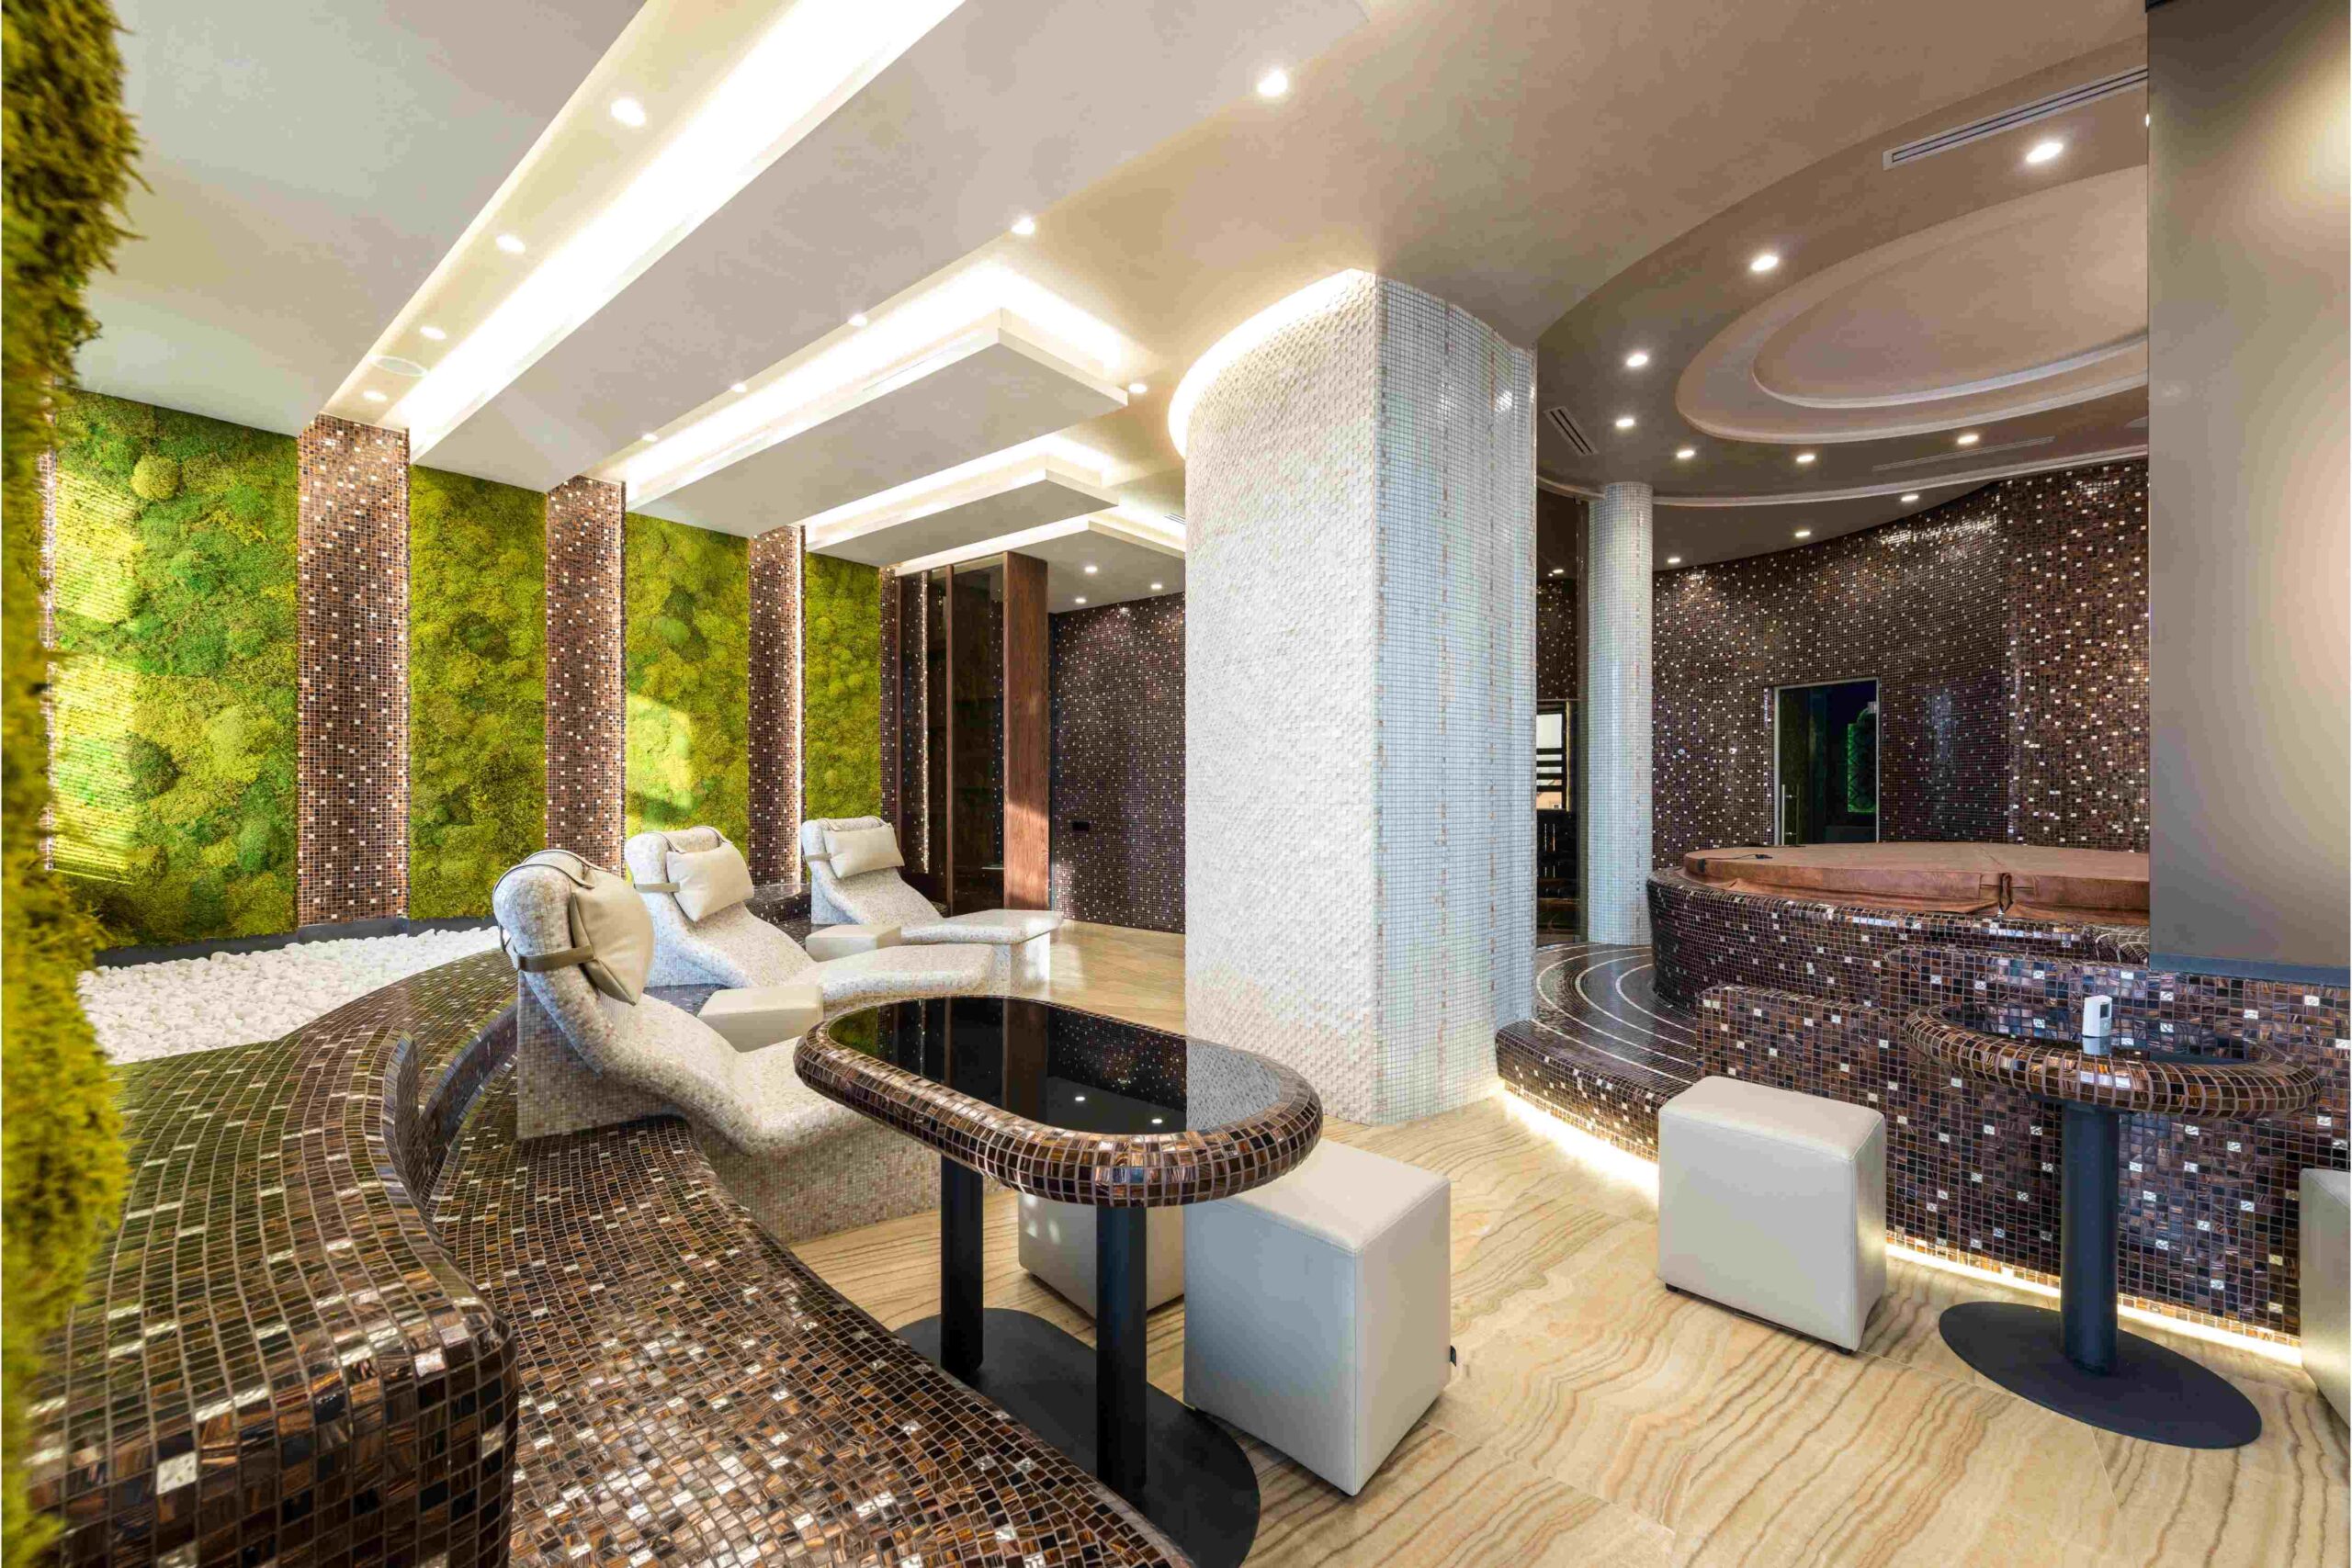 Luxury hotel spa interior design